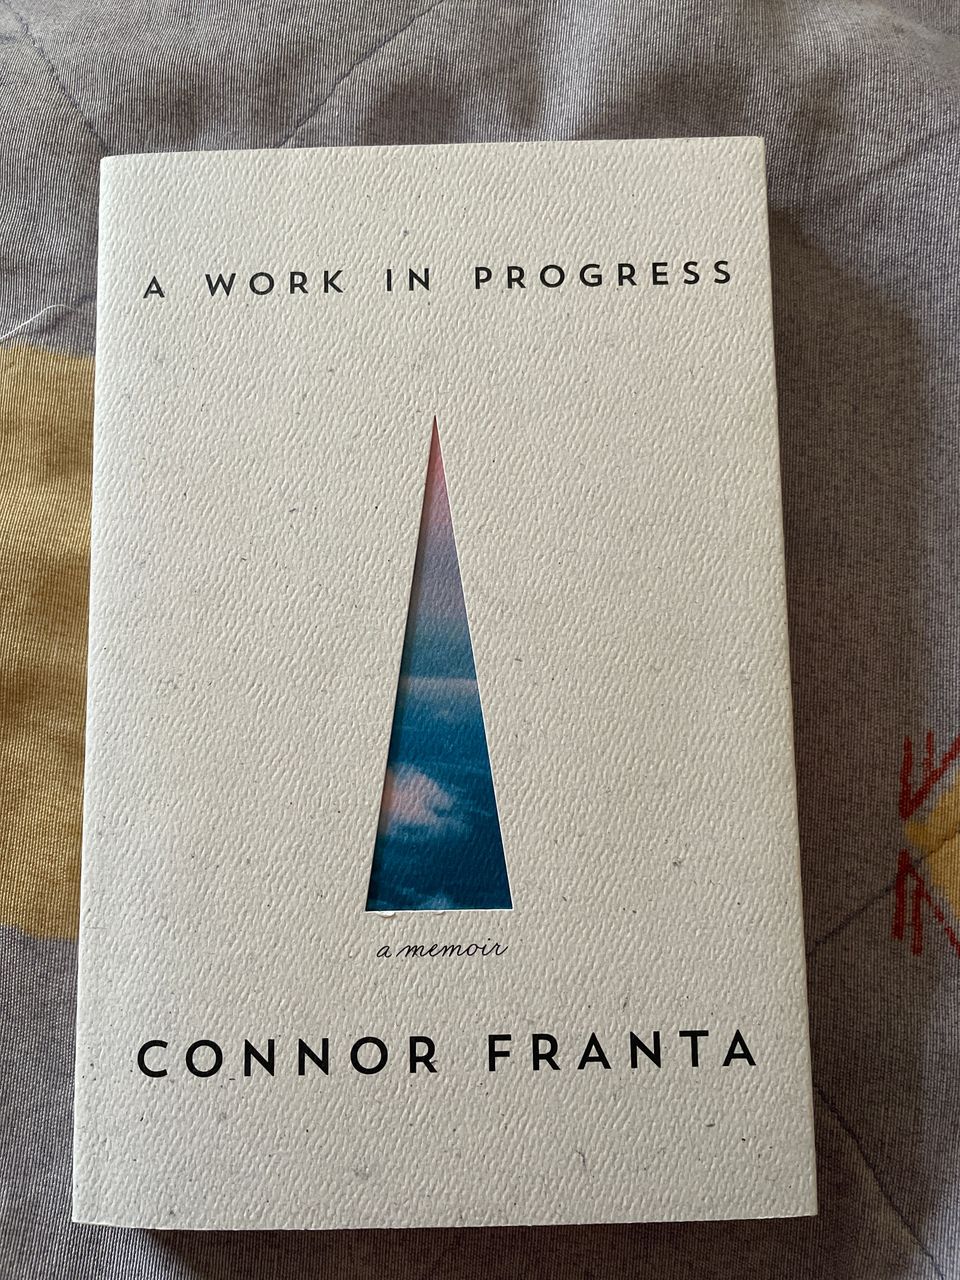 A work in progress - Connor Franta